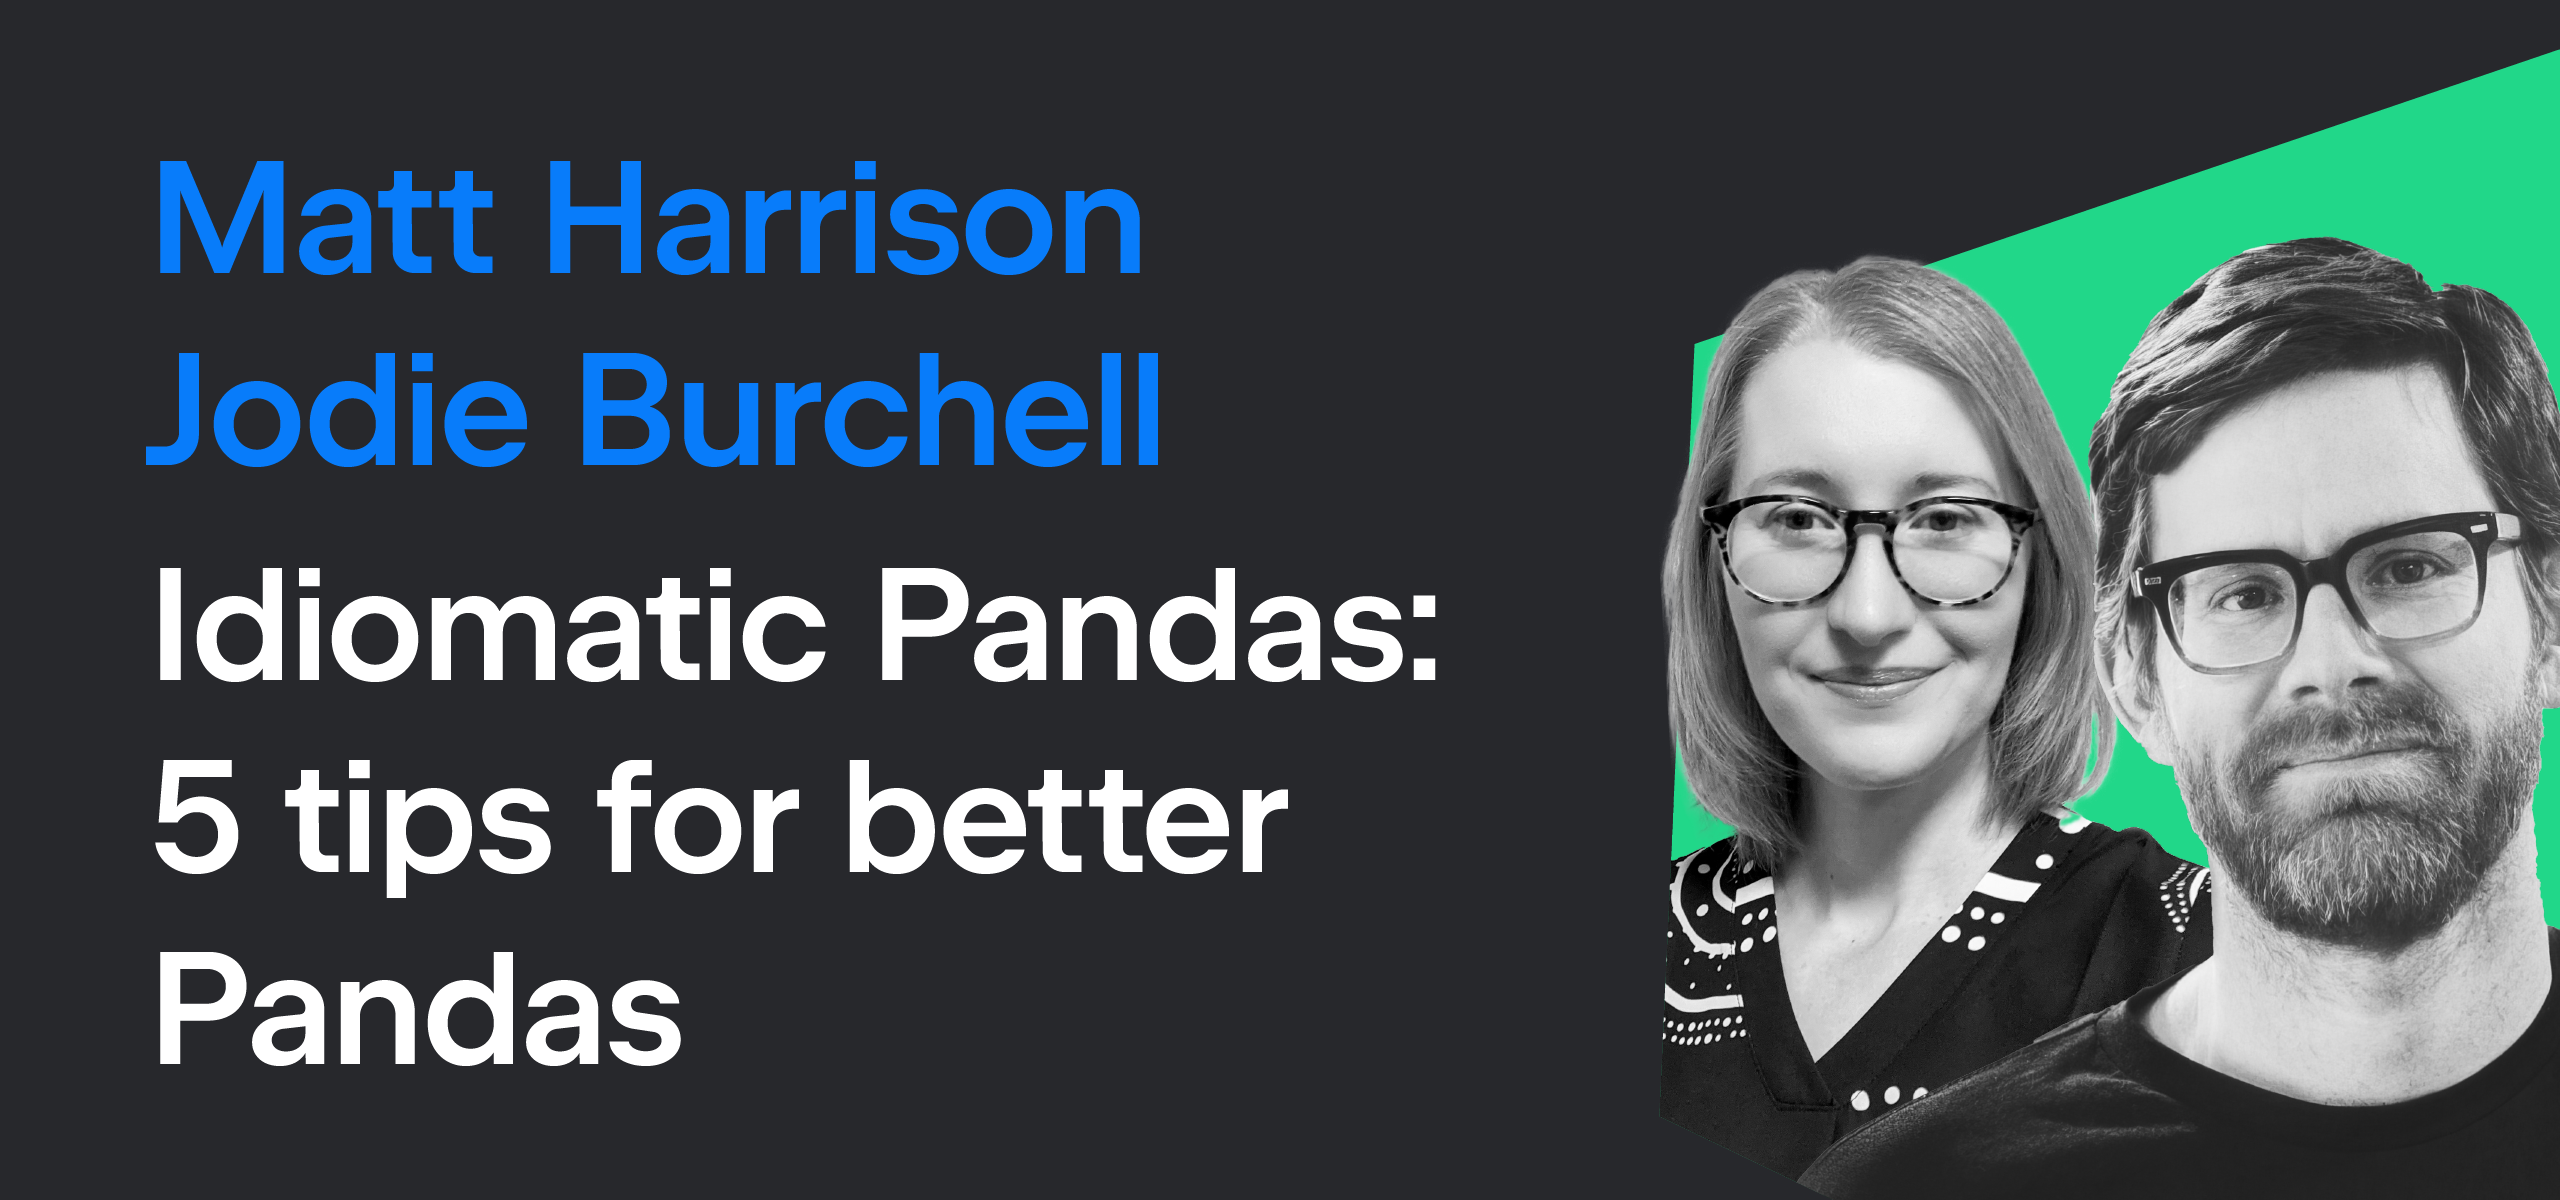 Webinar: “Idiomatic Pandas: 5 tips for better Pandas”, With Matt Harrison and Jodie Burchell